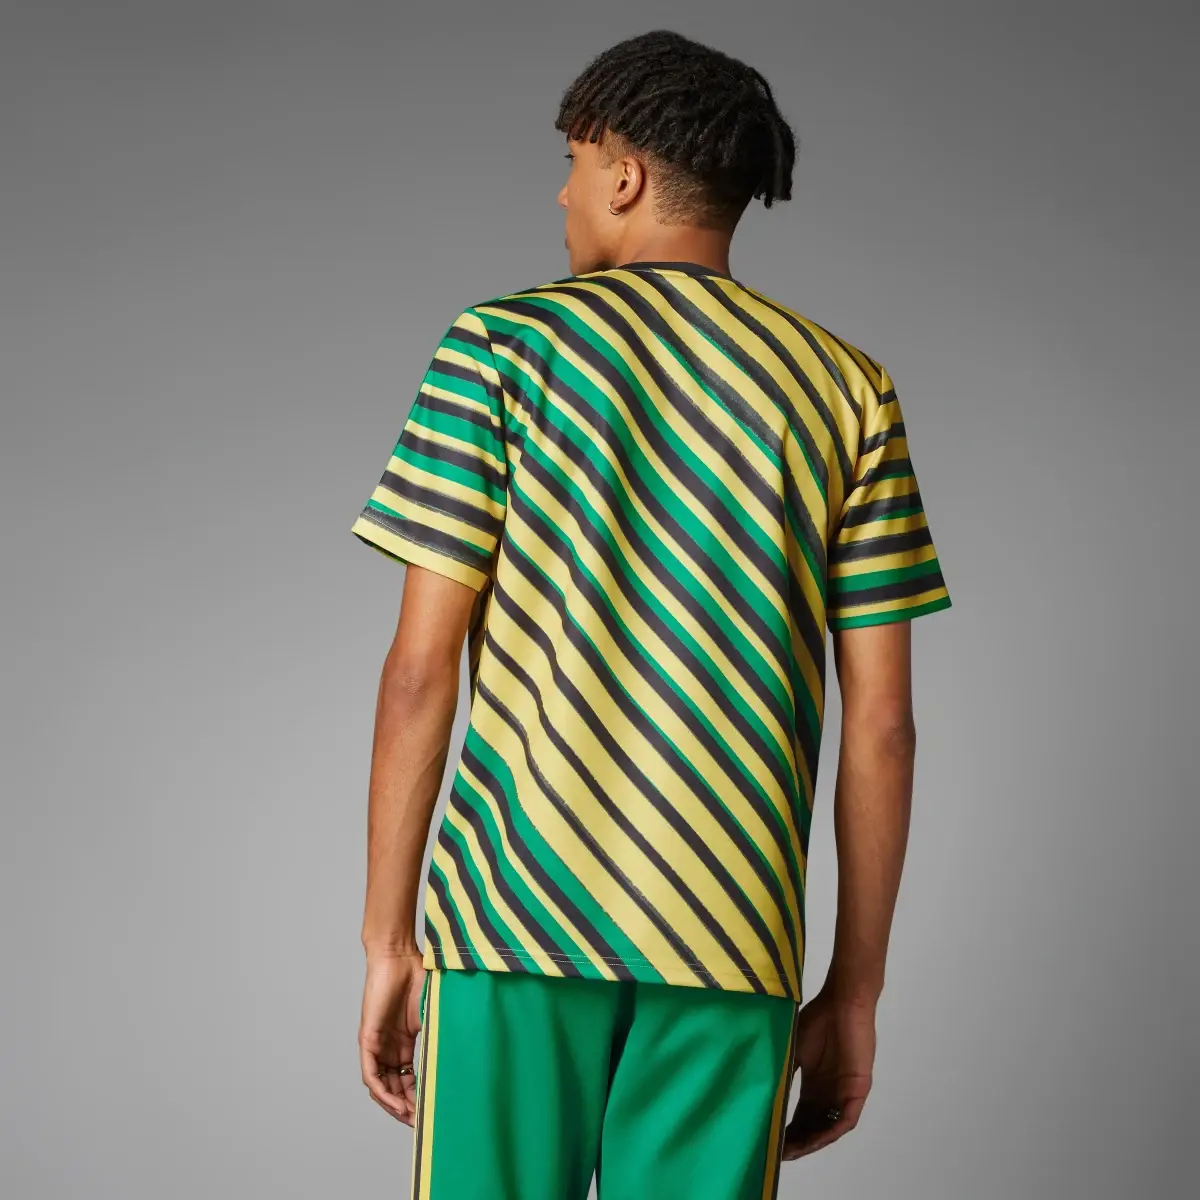 Adidas Koszulka Jamaica Trefoil. 2